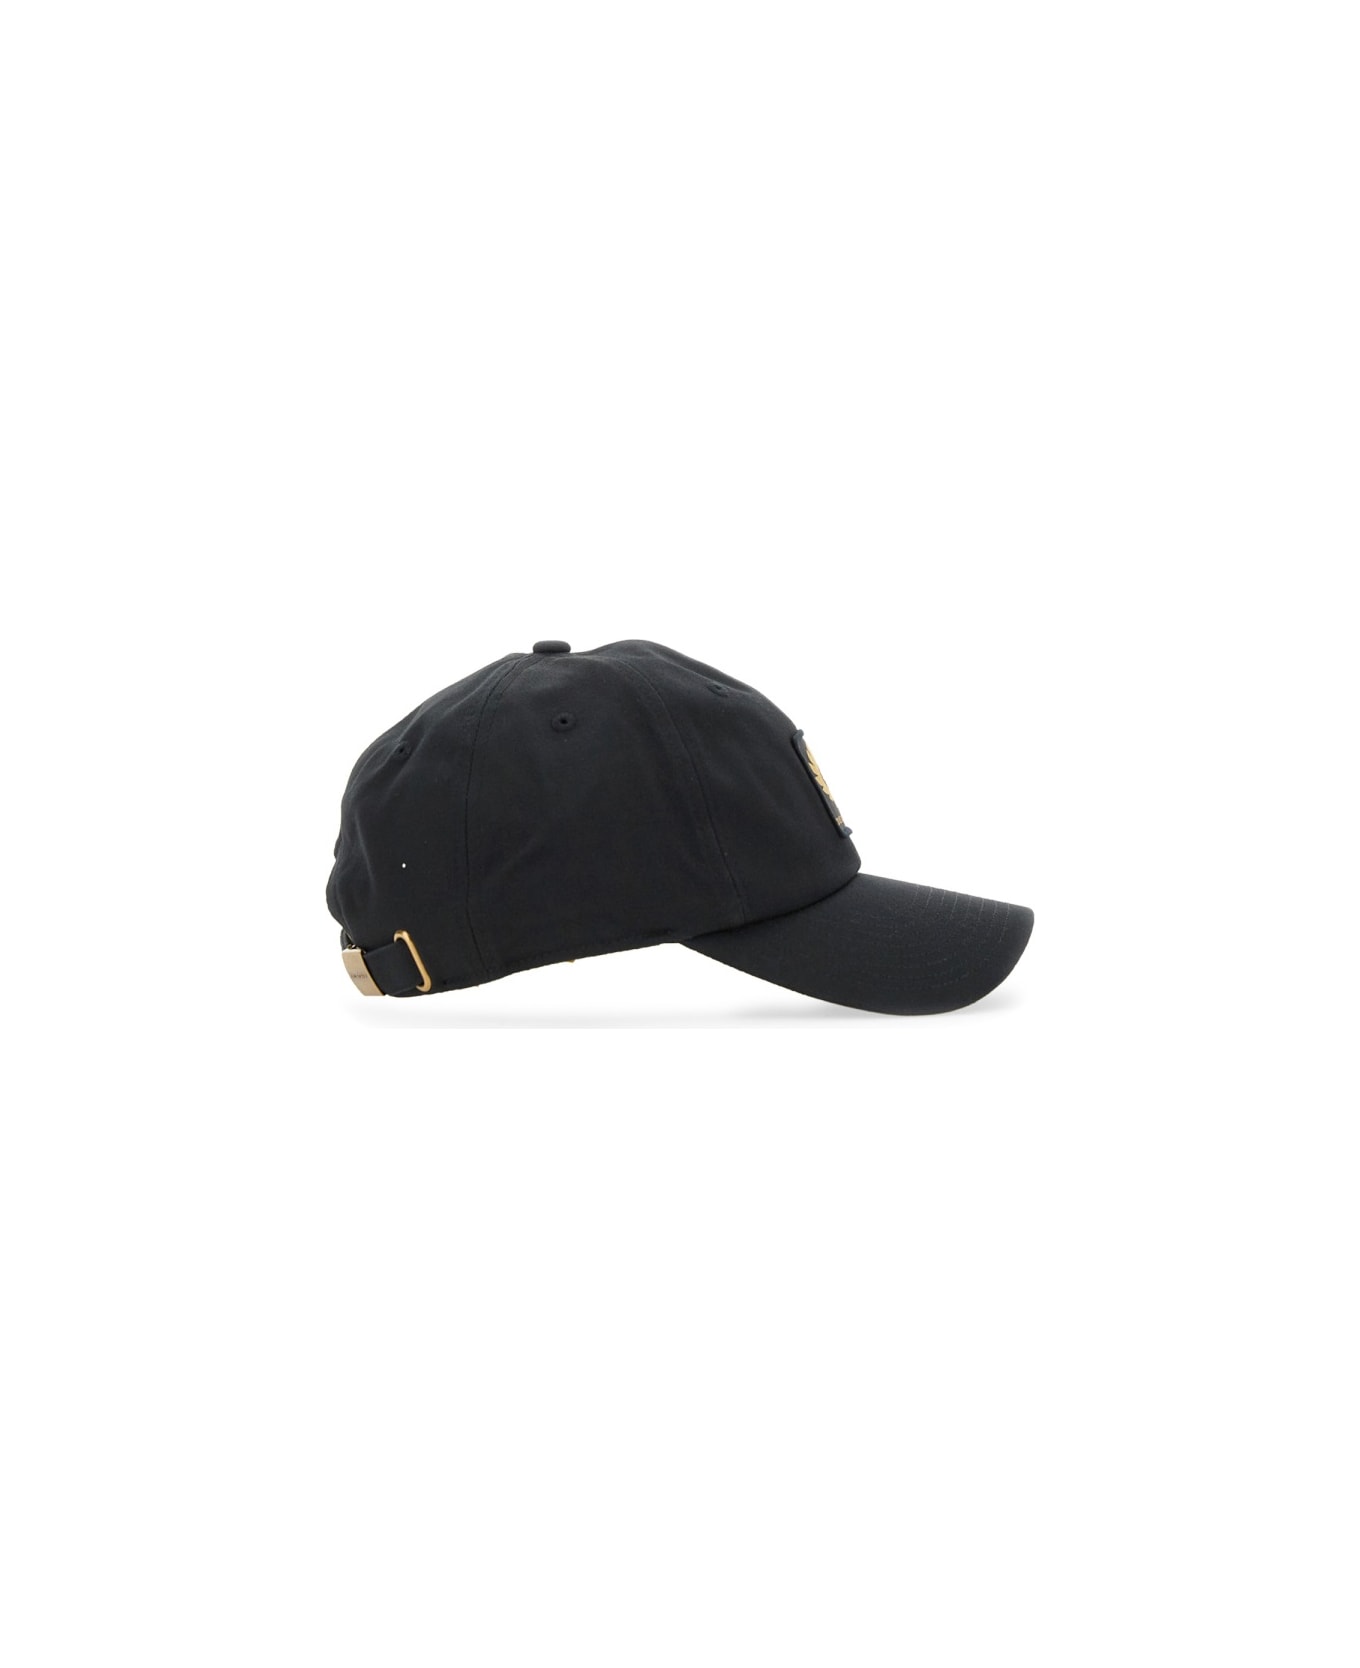 Belstaff Baseball Hat With Logo - BLACK